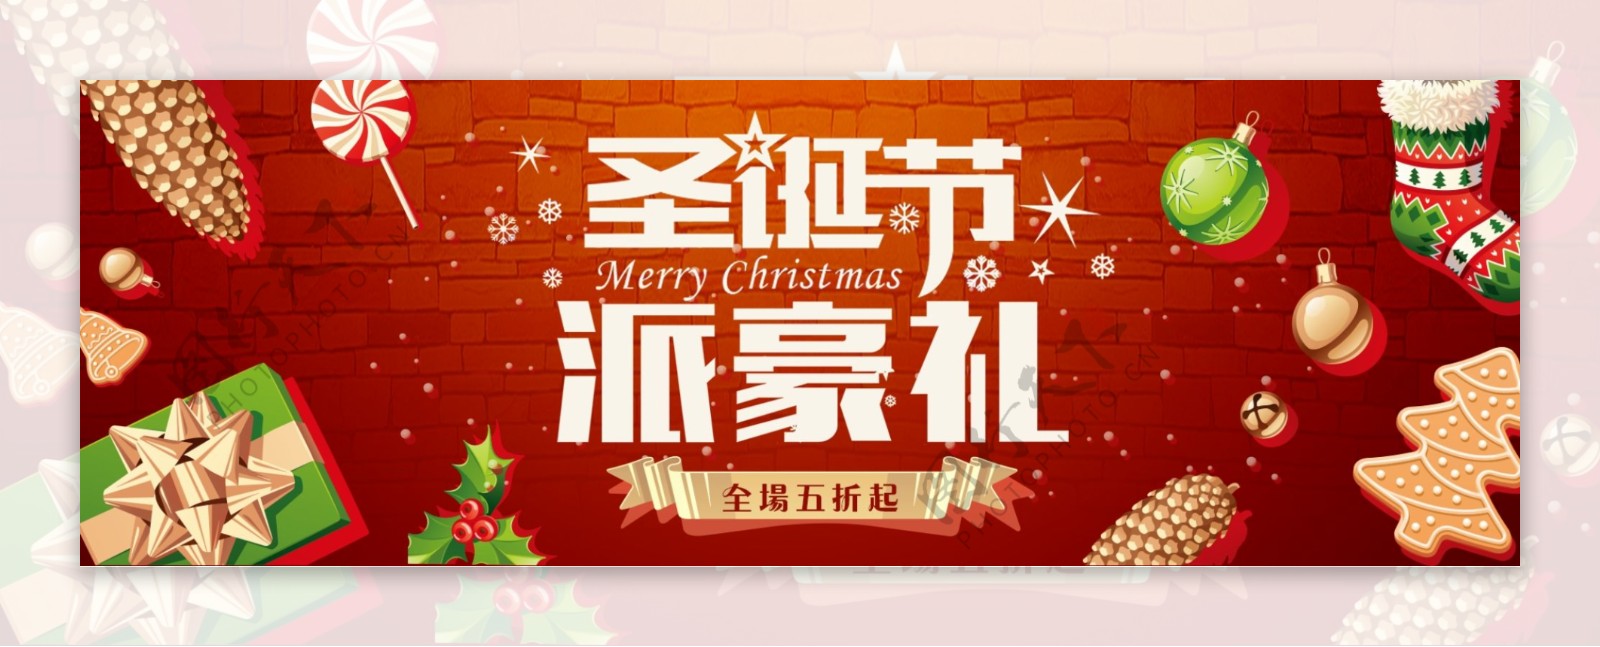 红色卡通袜子礼物圣诞节电商banner